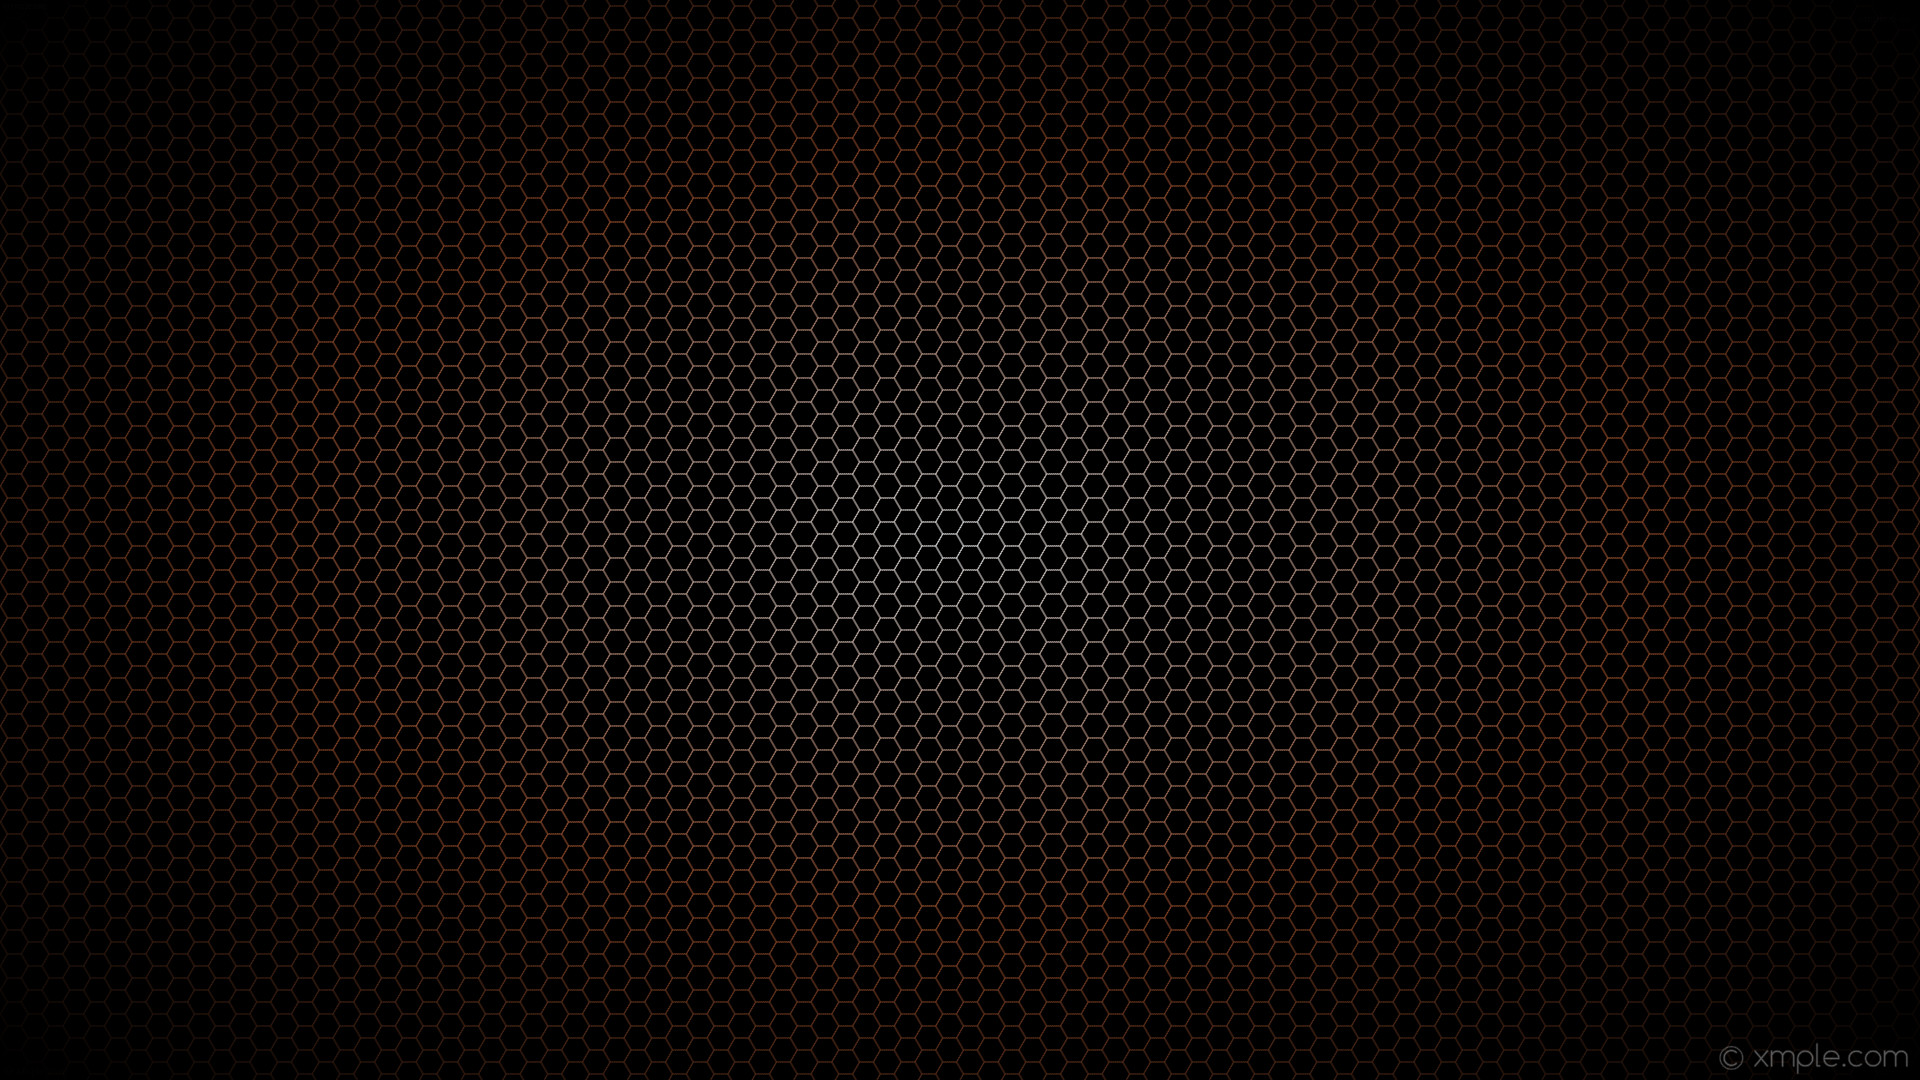 1920x1080 wallpaper black white glow brown hexagon gradient sienna #000000 #ffffff  #a0522d diagonal 30